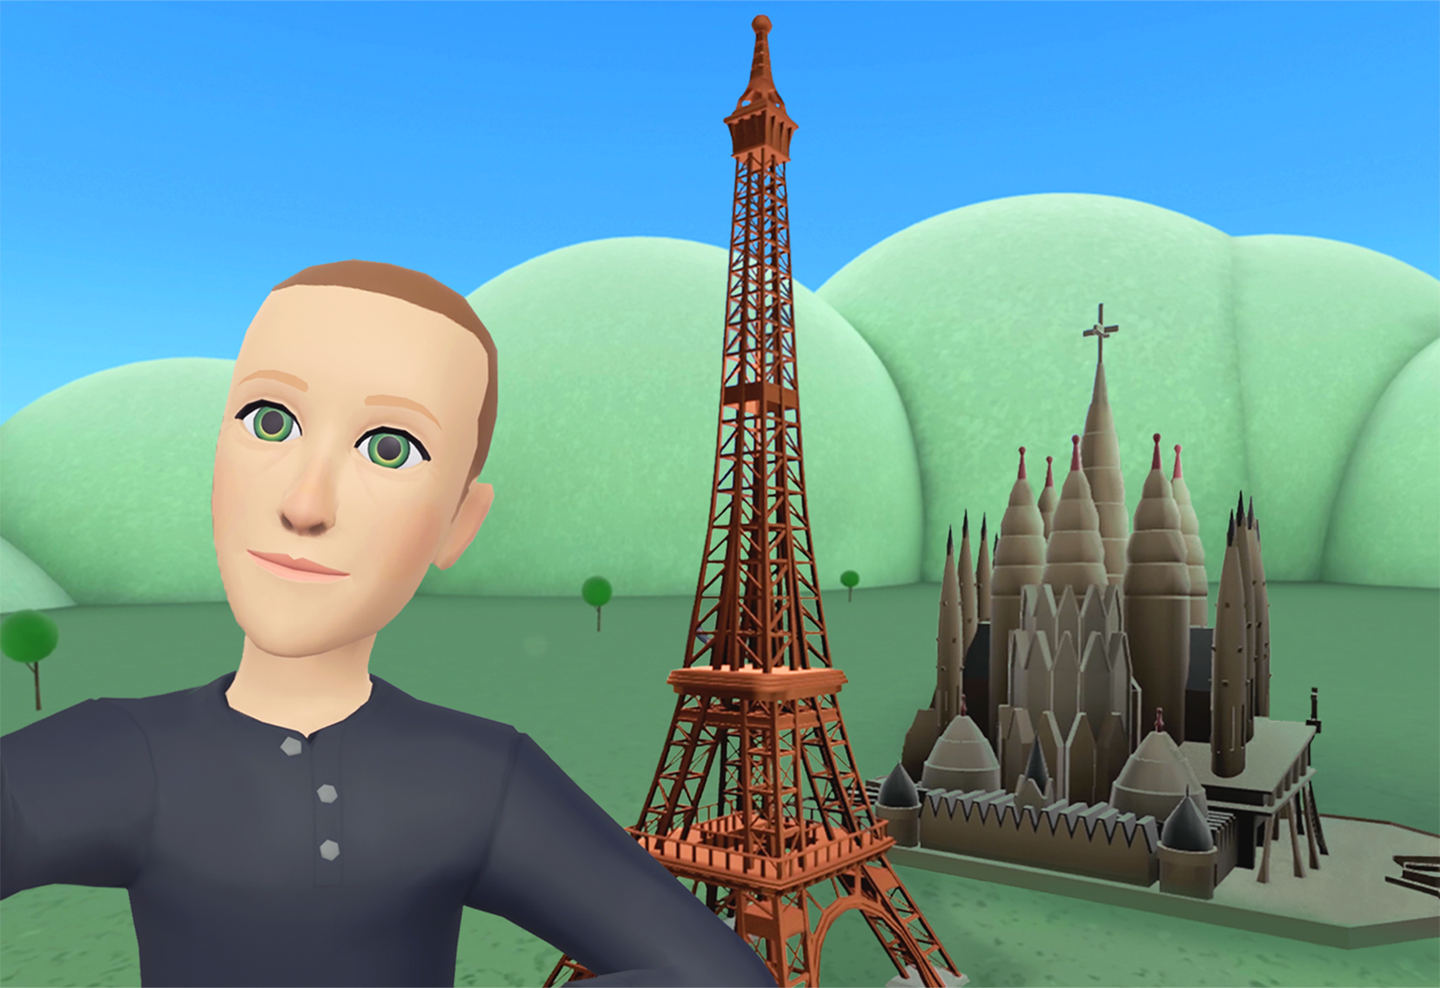 Mark Zuckerberg's avatar next to famous French and Spanish landmarks